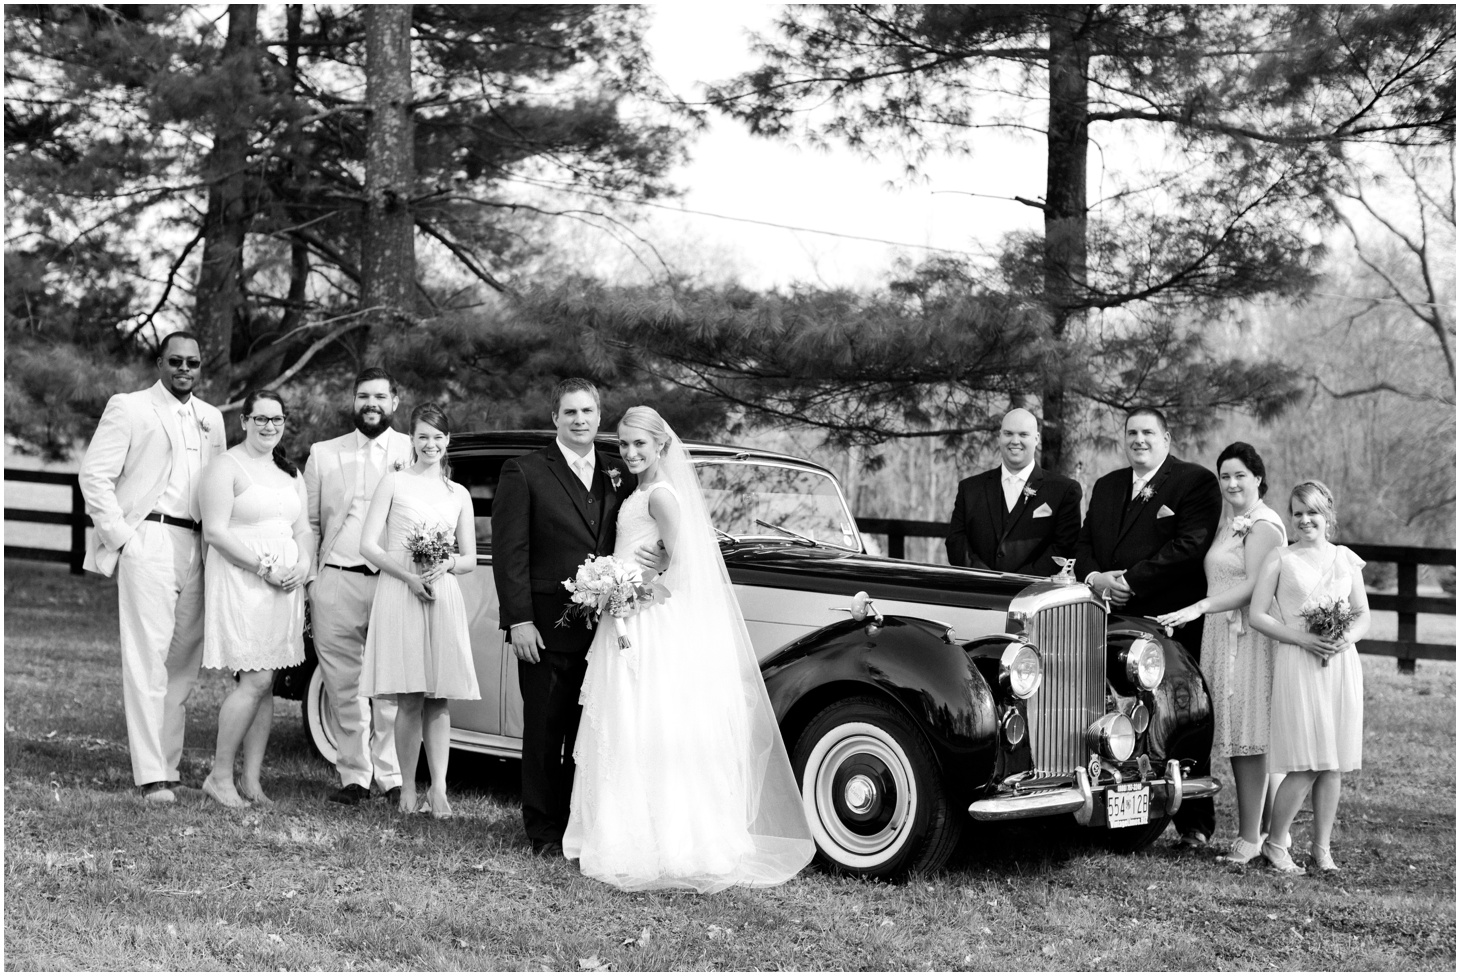 Brent & Lydia, Vintage Inspired Virginia Winery Wedding at Hillsborough Vineyard by Sarah Bradshaw Photography